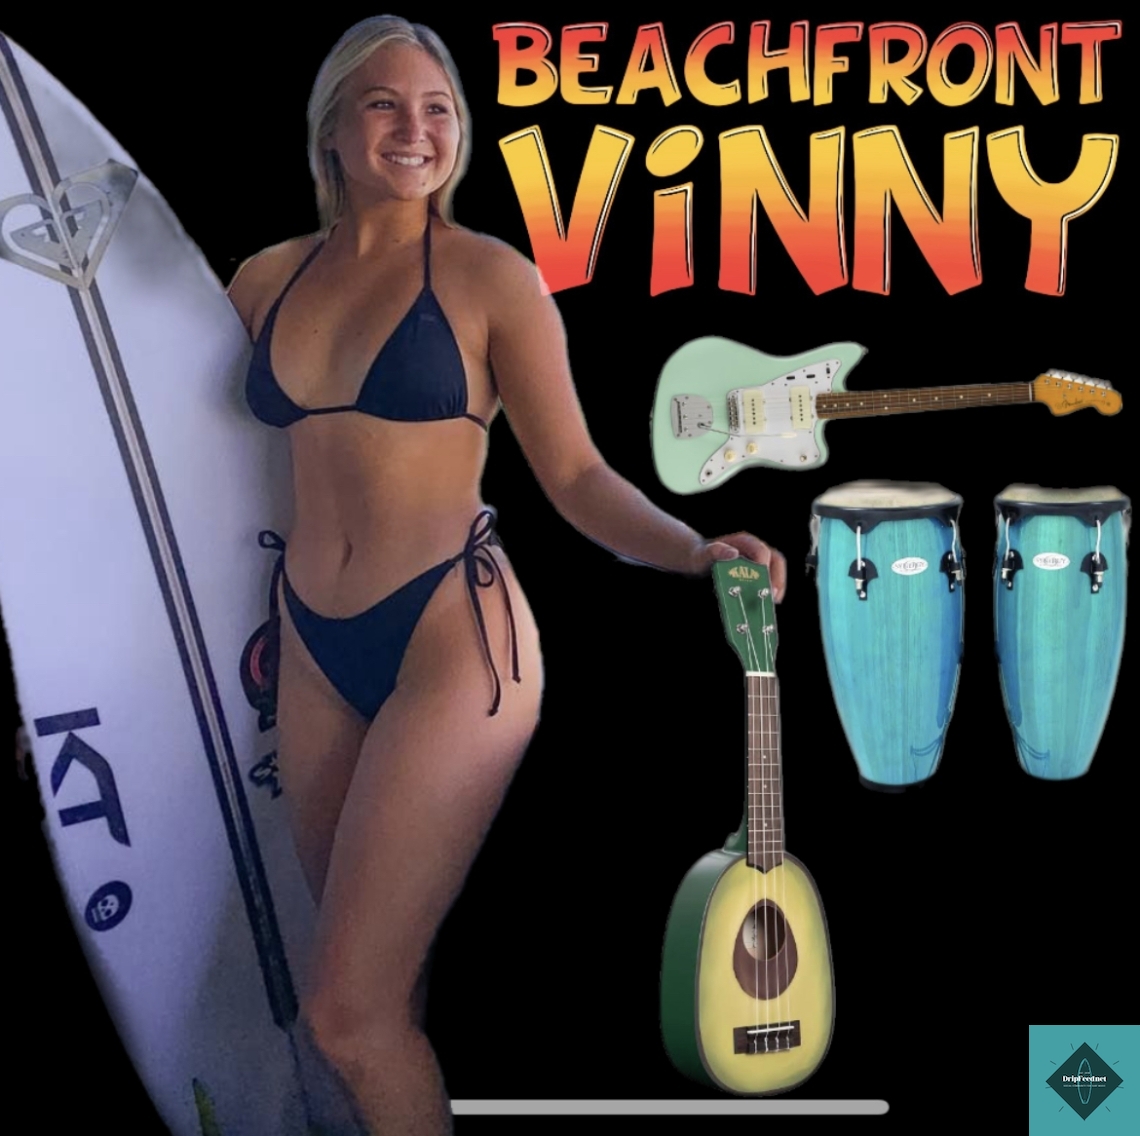 Beachfront Vinny